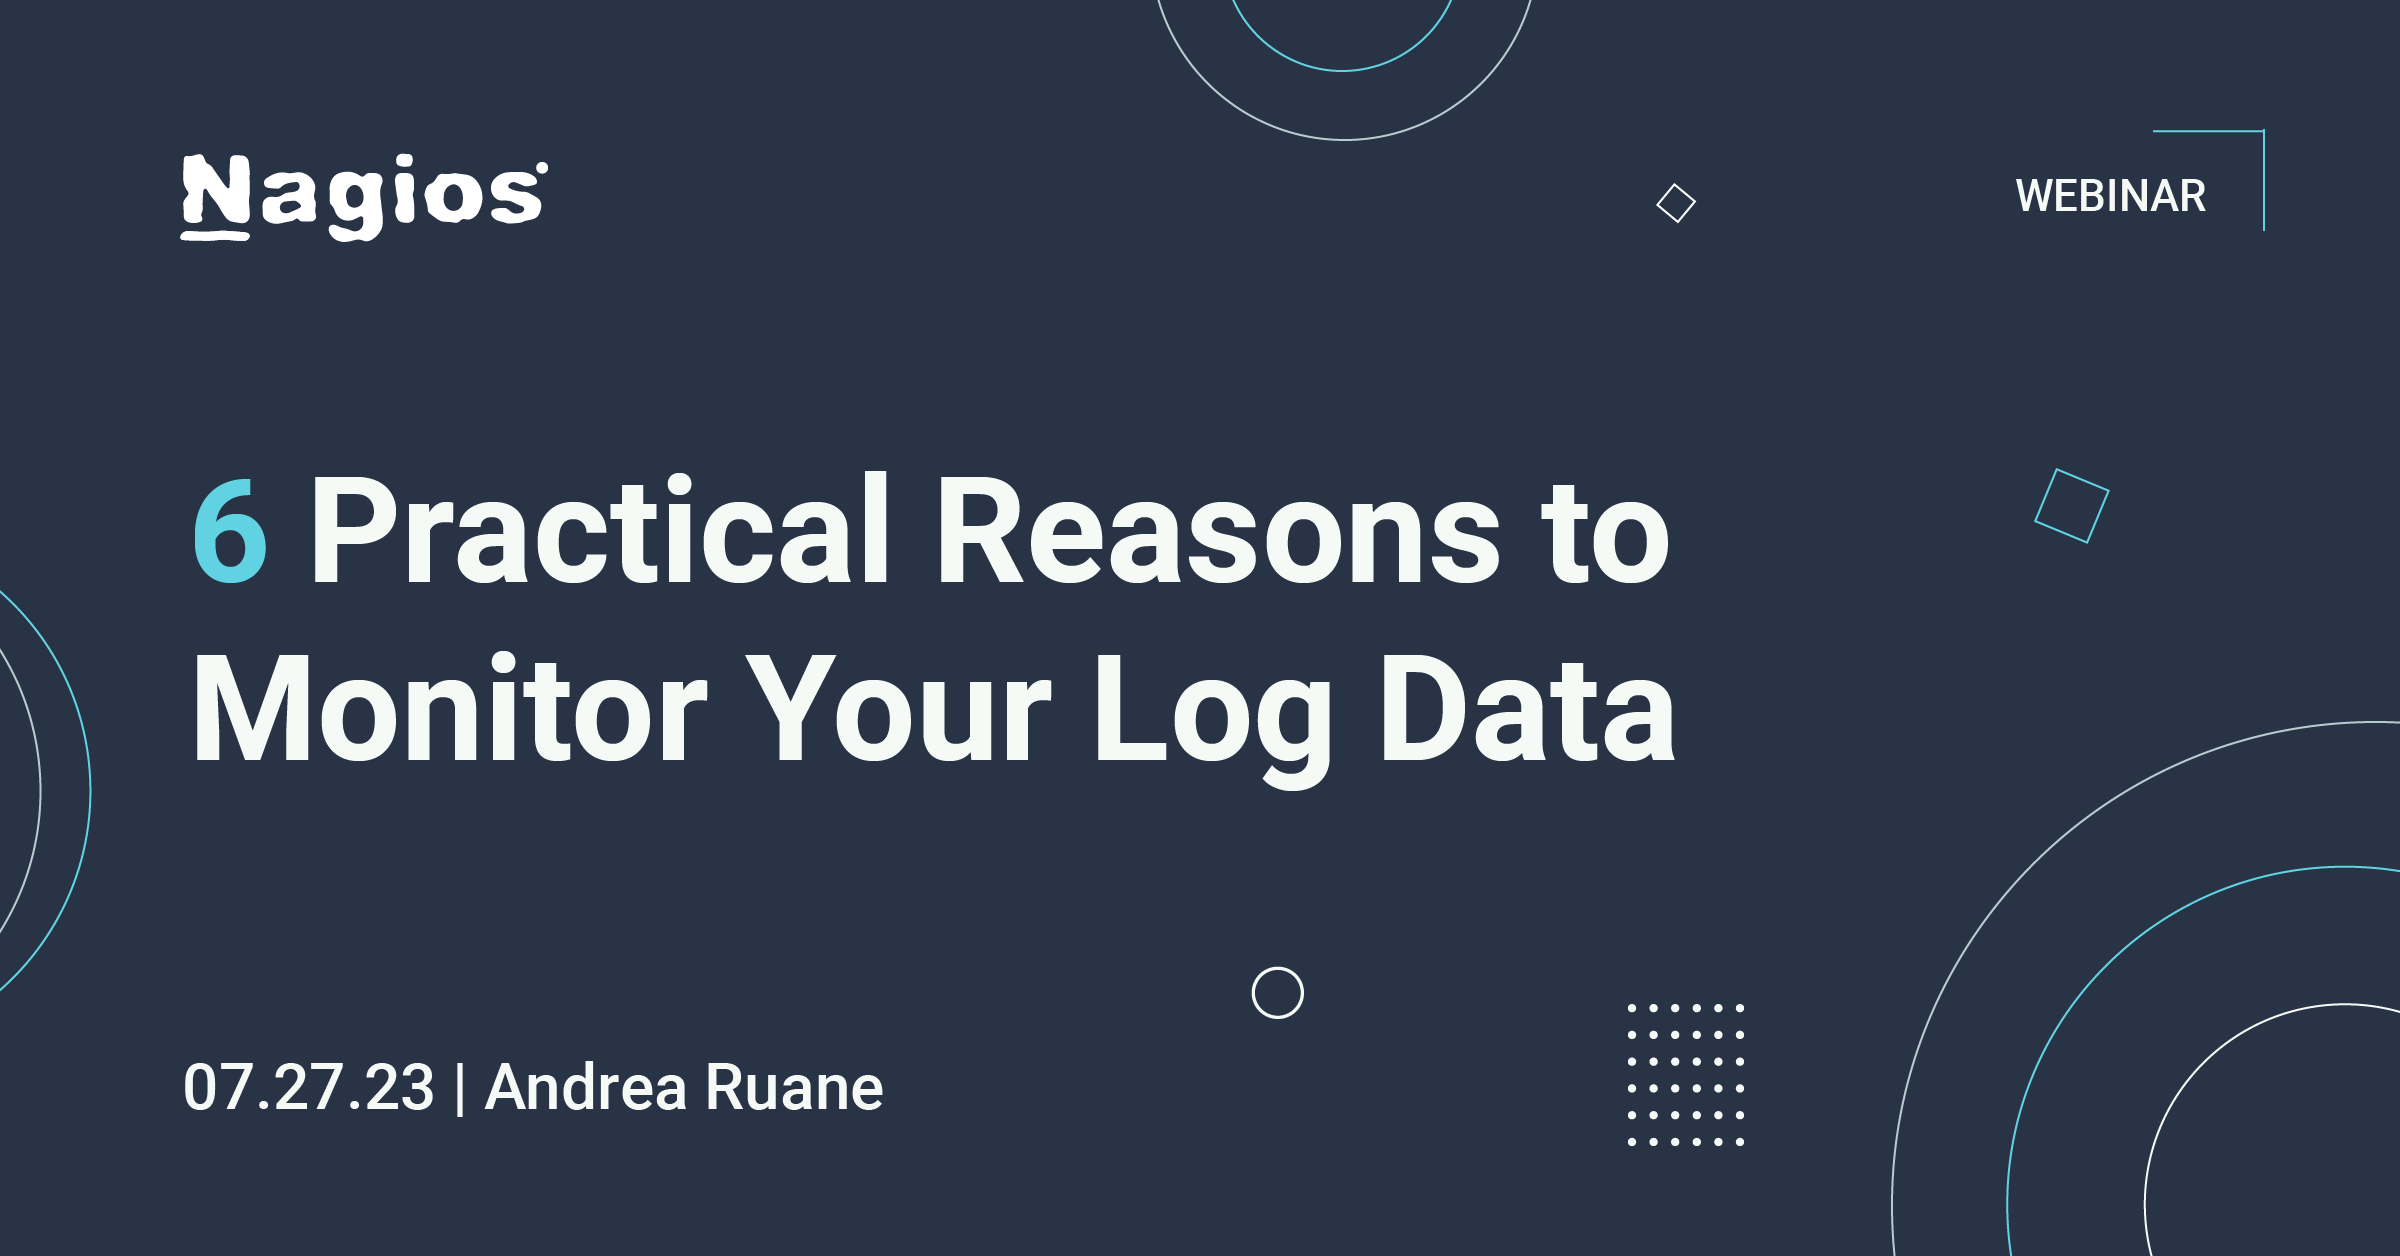 nagios webinars: 6 Practical Reasons to Monitor Your Log Data